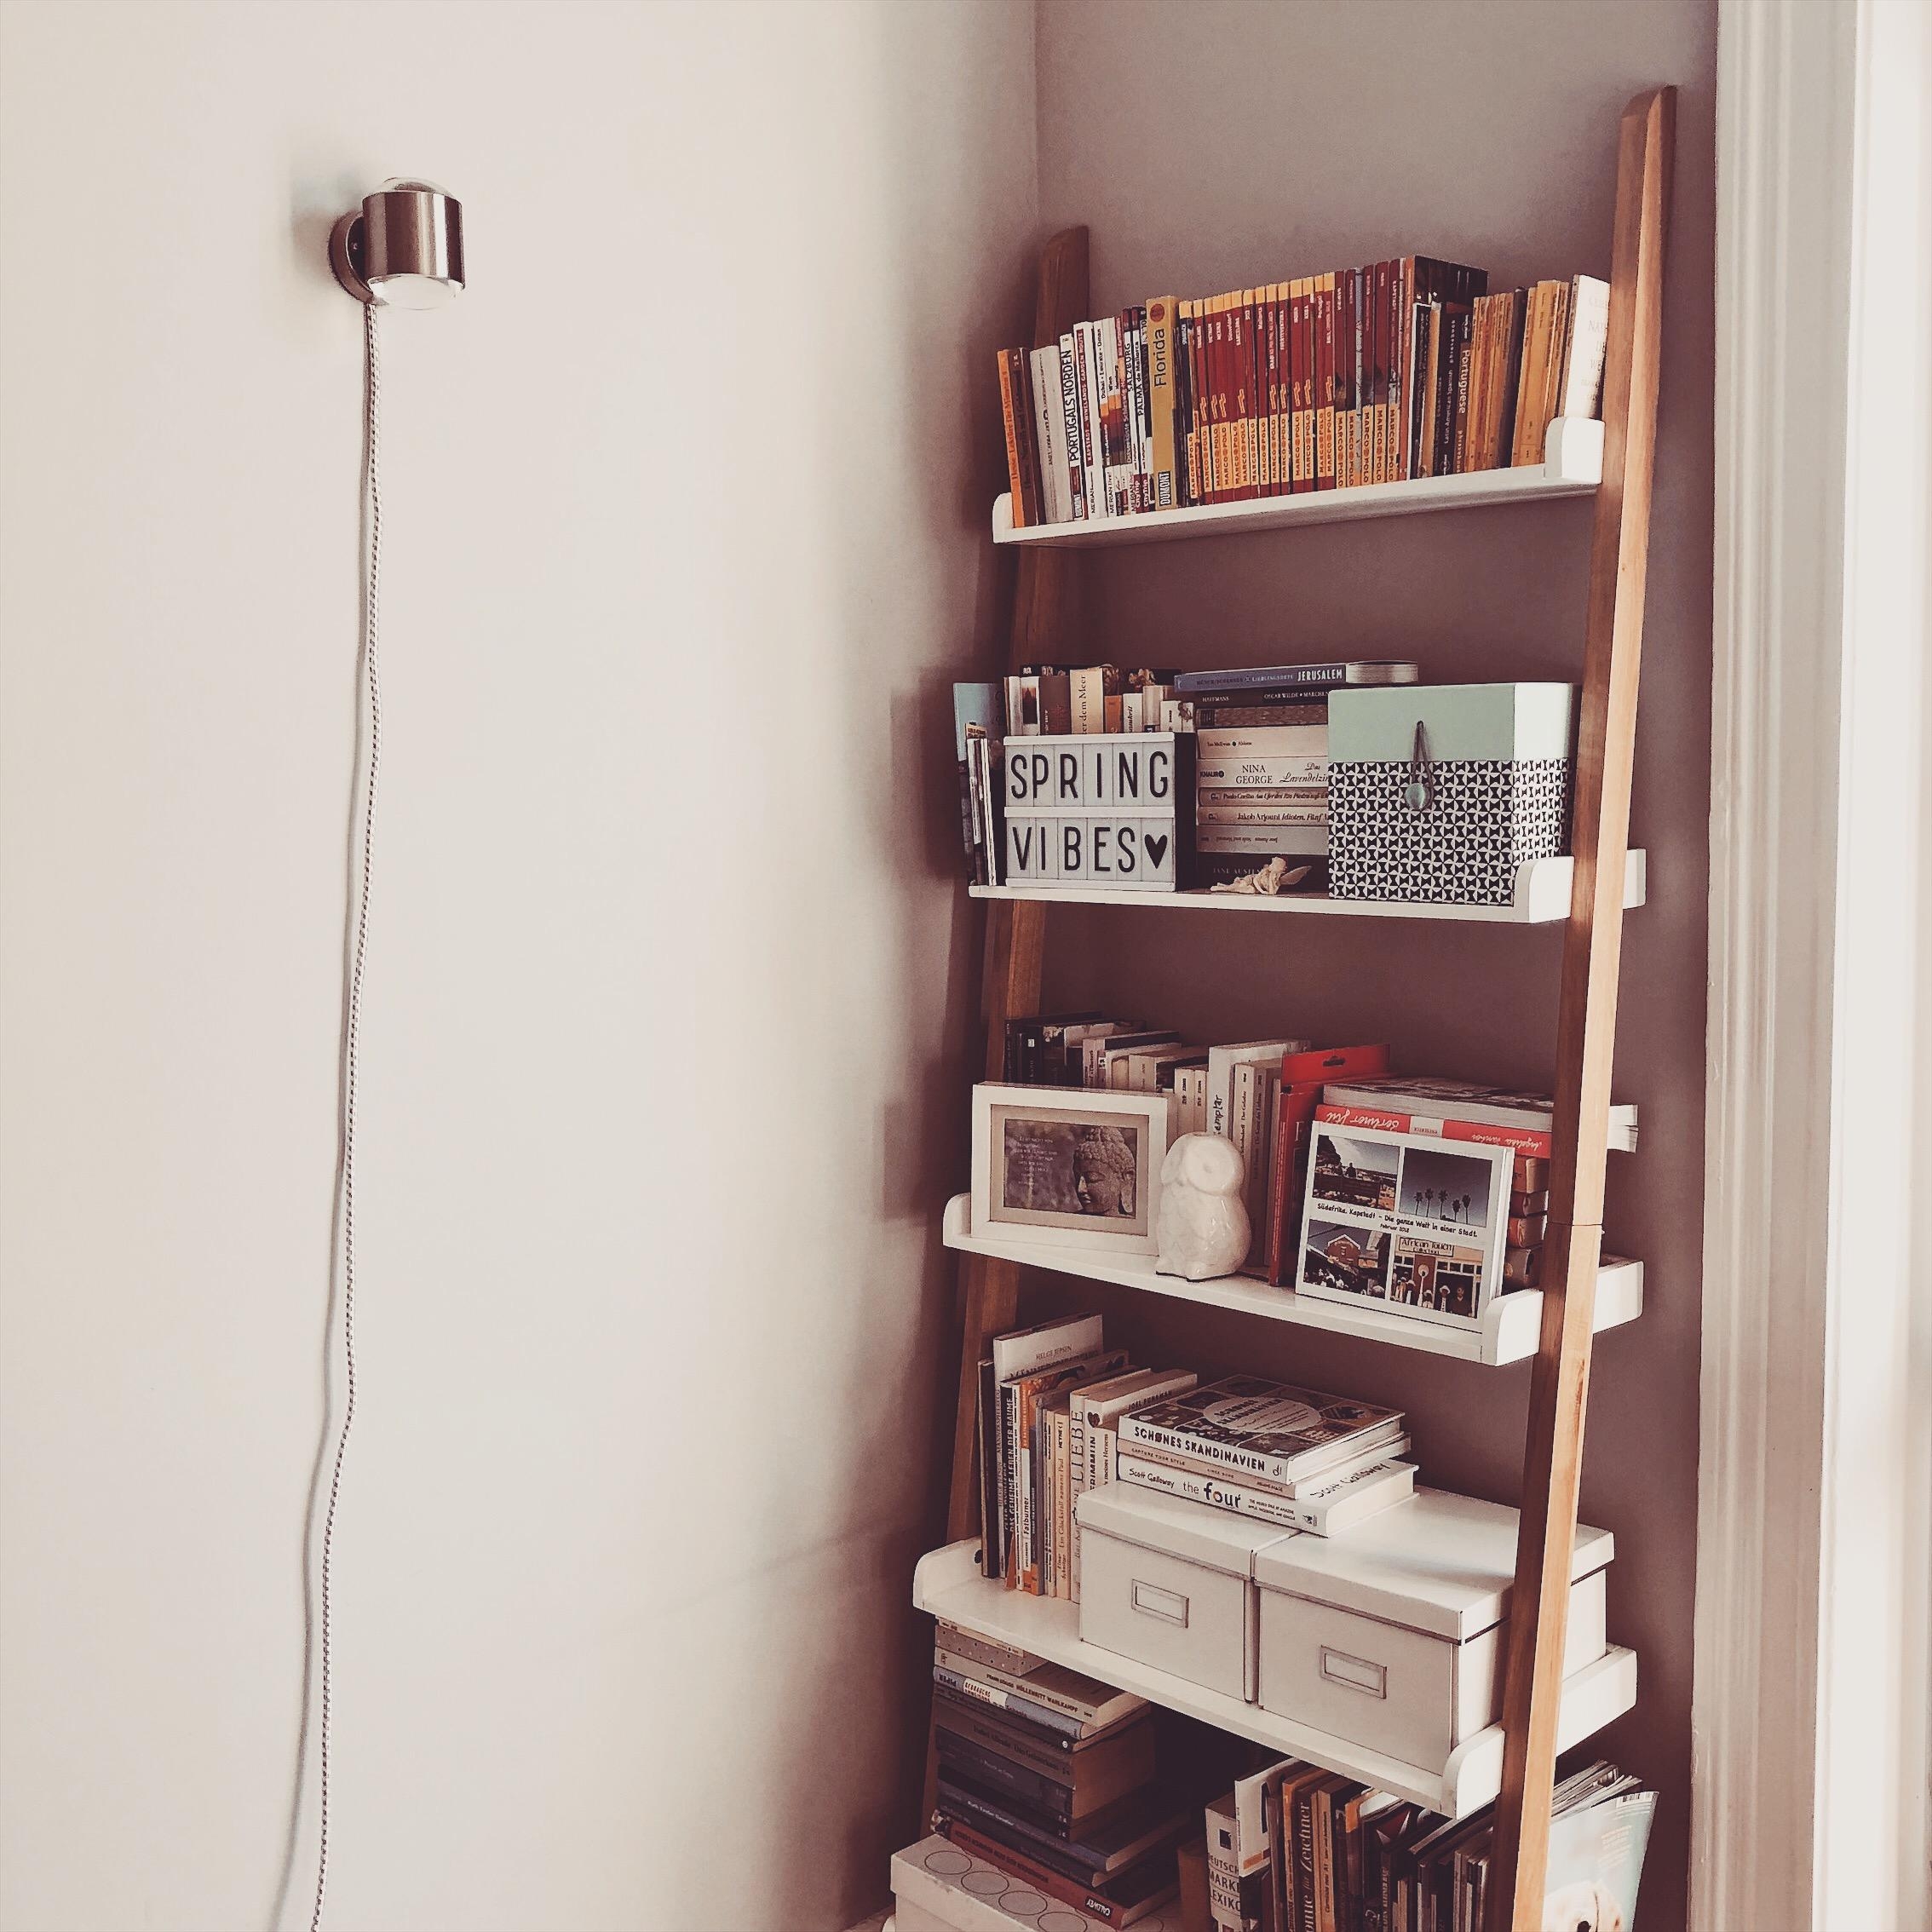 sundays are for reading. #books #shelf #bücherliebe #homedecor #decoration #homeinspo #interiorstyle #books #regal